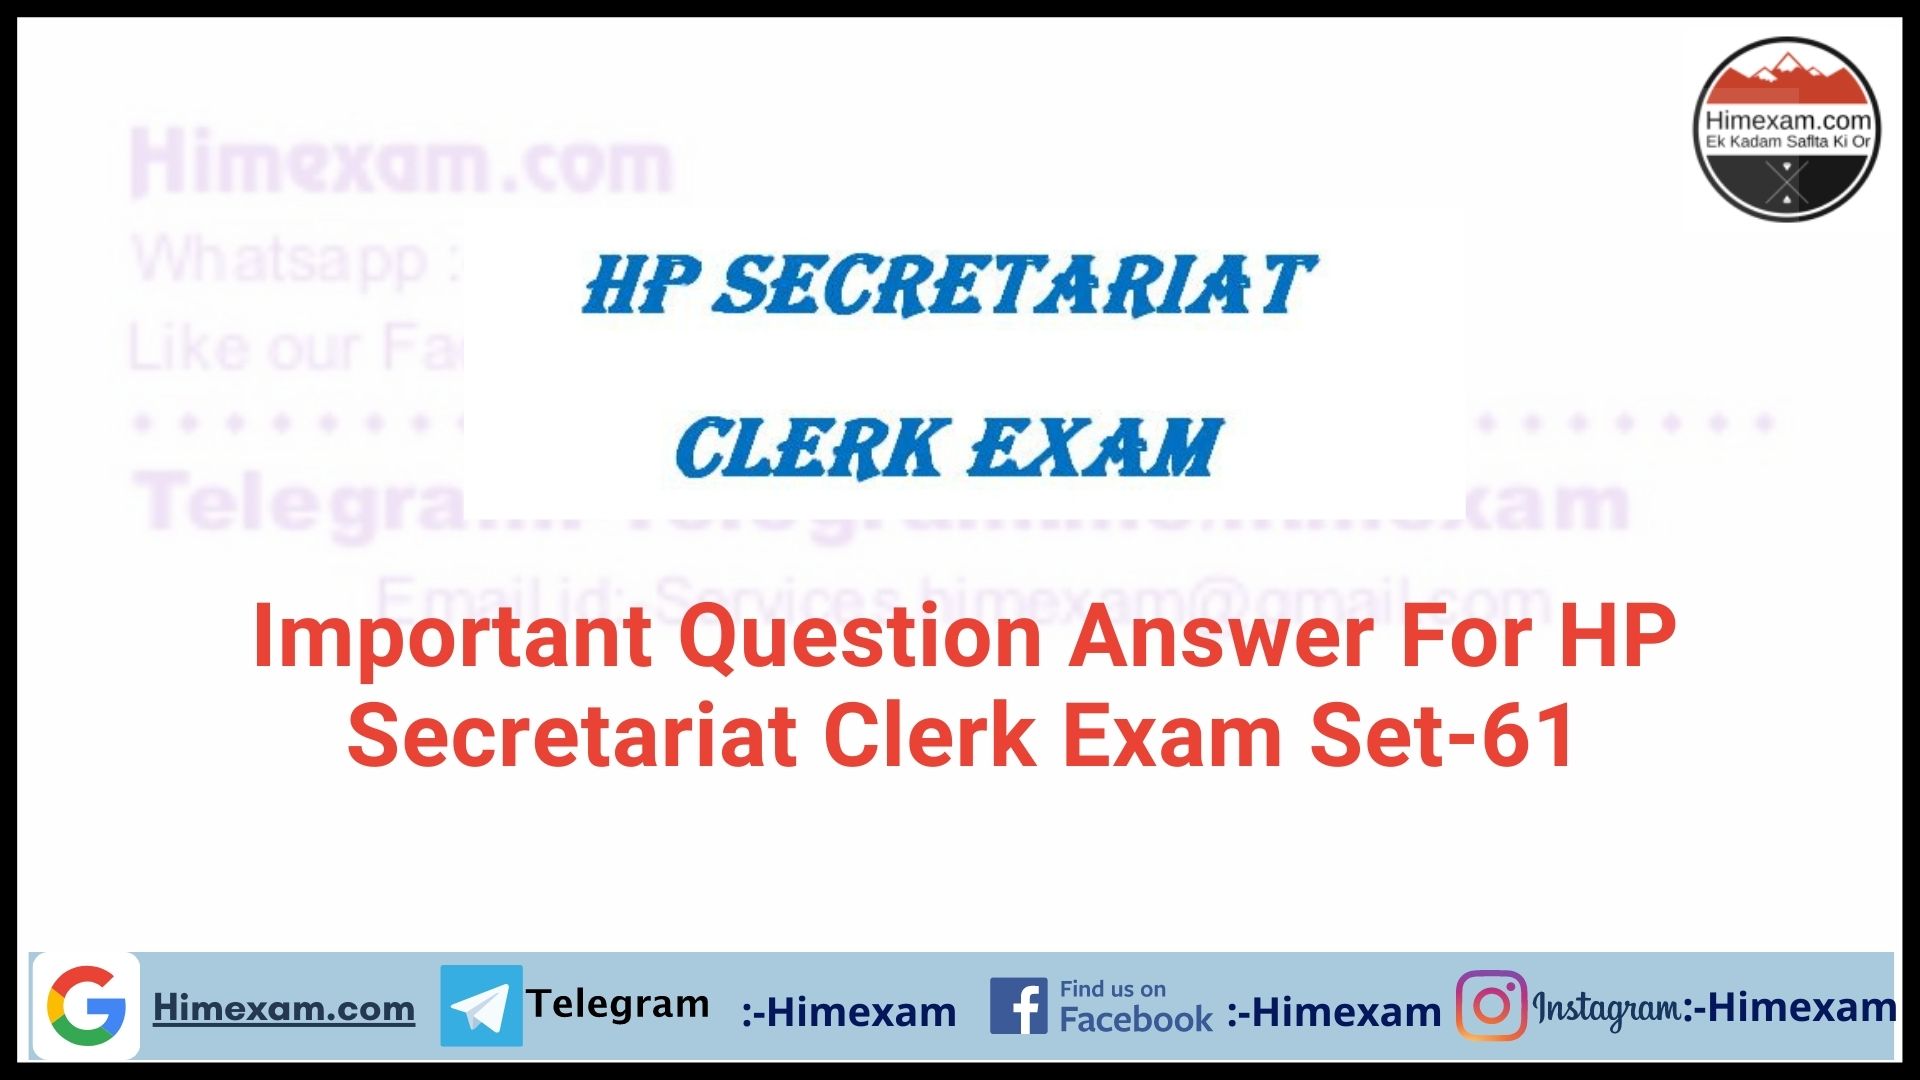 Important Question Answer For HP Secretariat Clerk Exam Set-61